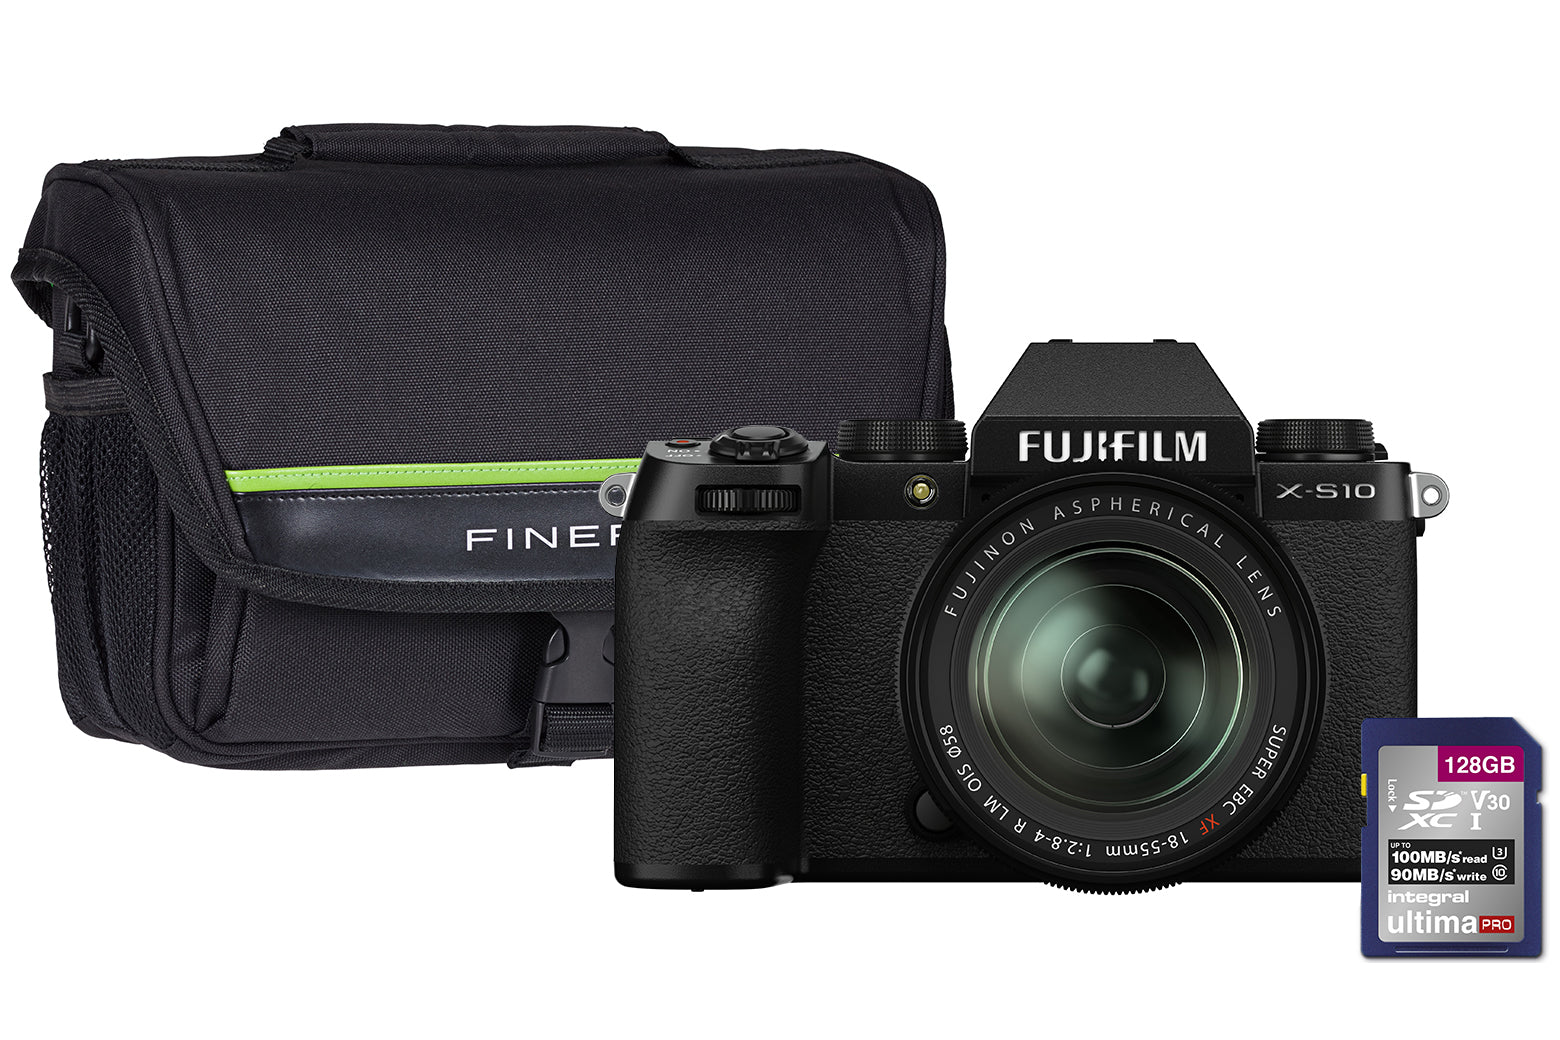 Fujifilm X-S10 Mirrorless Camera - Black (Camera + 18-55mm Lens + 128GB SD Card + Case)